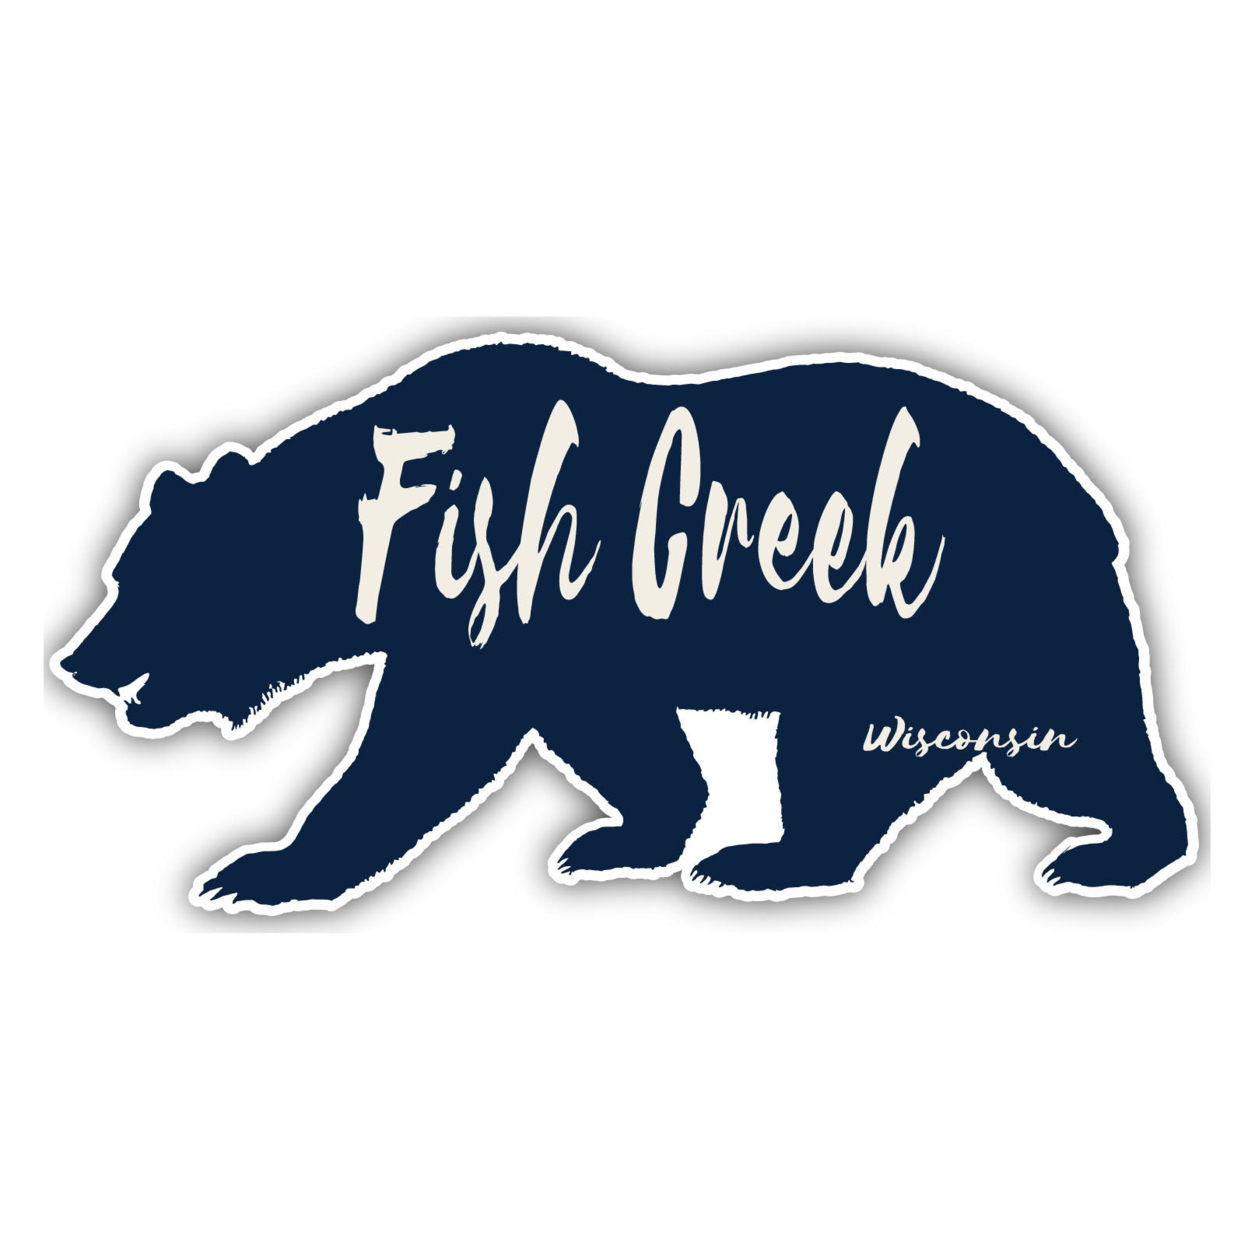 Fish Creek Wisconsin Souvenir Decorative Stickers (Choose Theme And Size) - Single Unit, 8-Inch, Bear